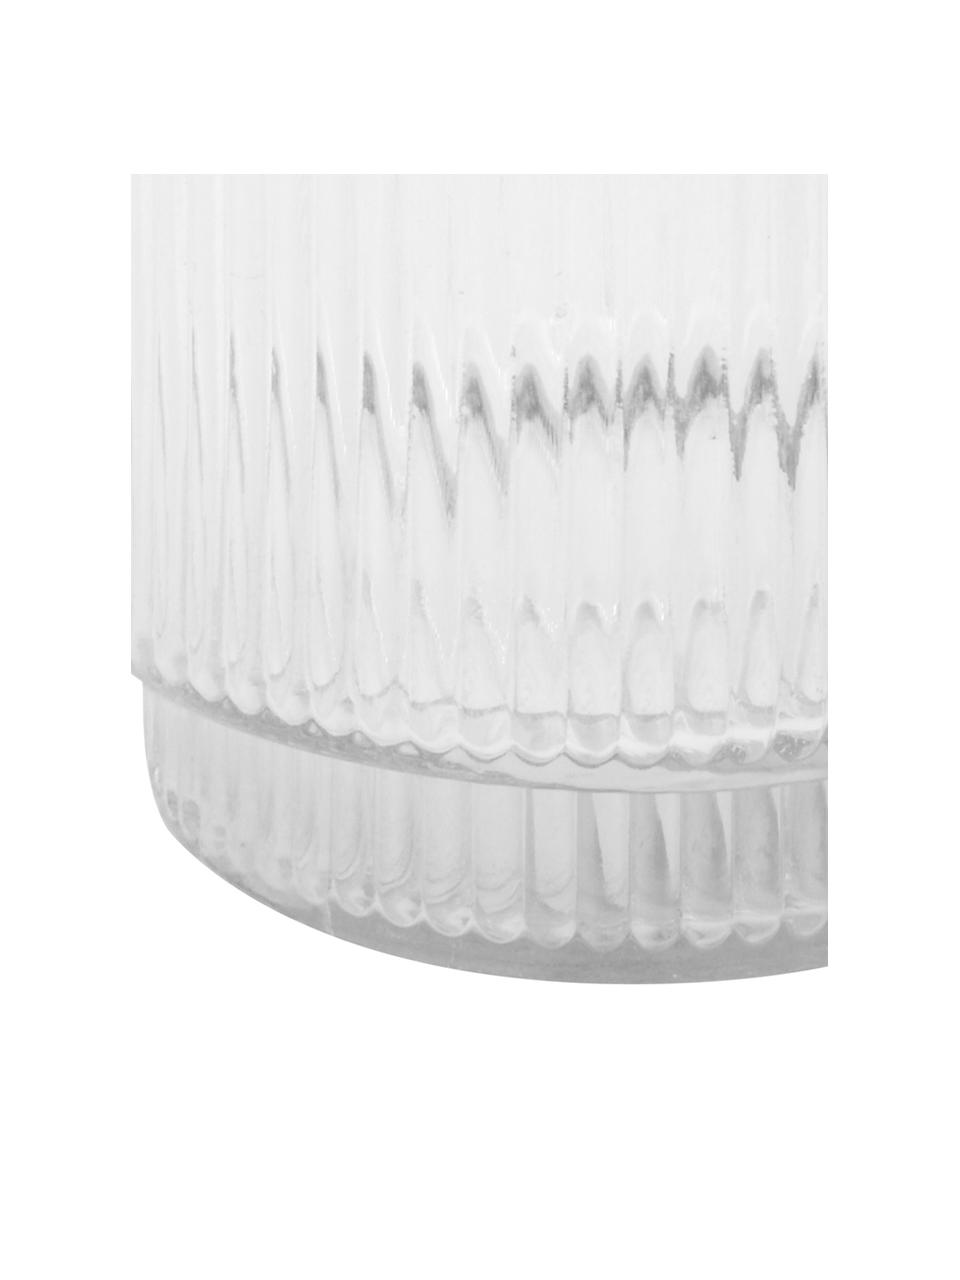 Tazza per lo spazzolino in vetro scanalato Ligia, Vetro, Trasparente, Ø 7 x Alt. 11 cm